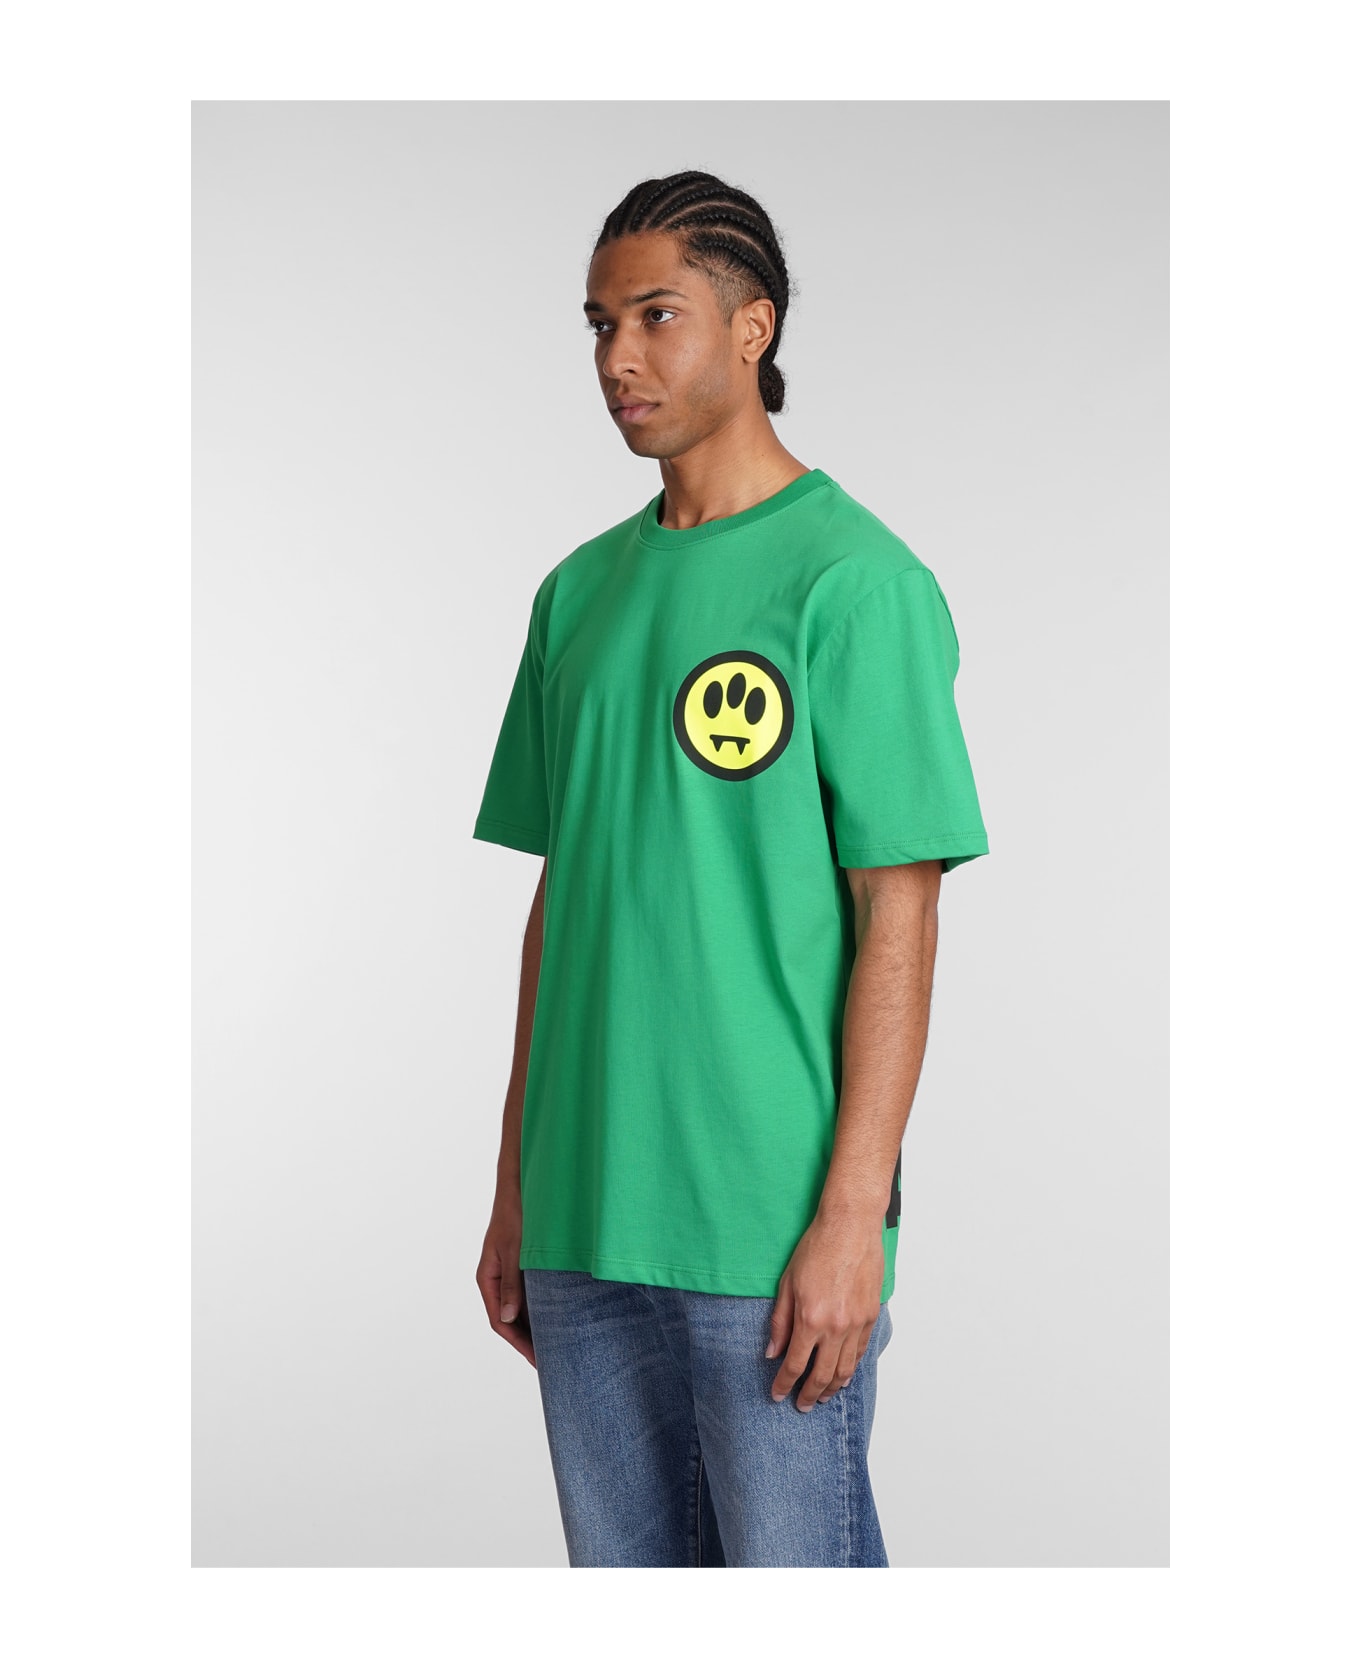 Barrow T-shirt In Green Cotton - green